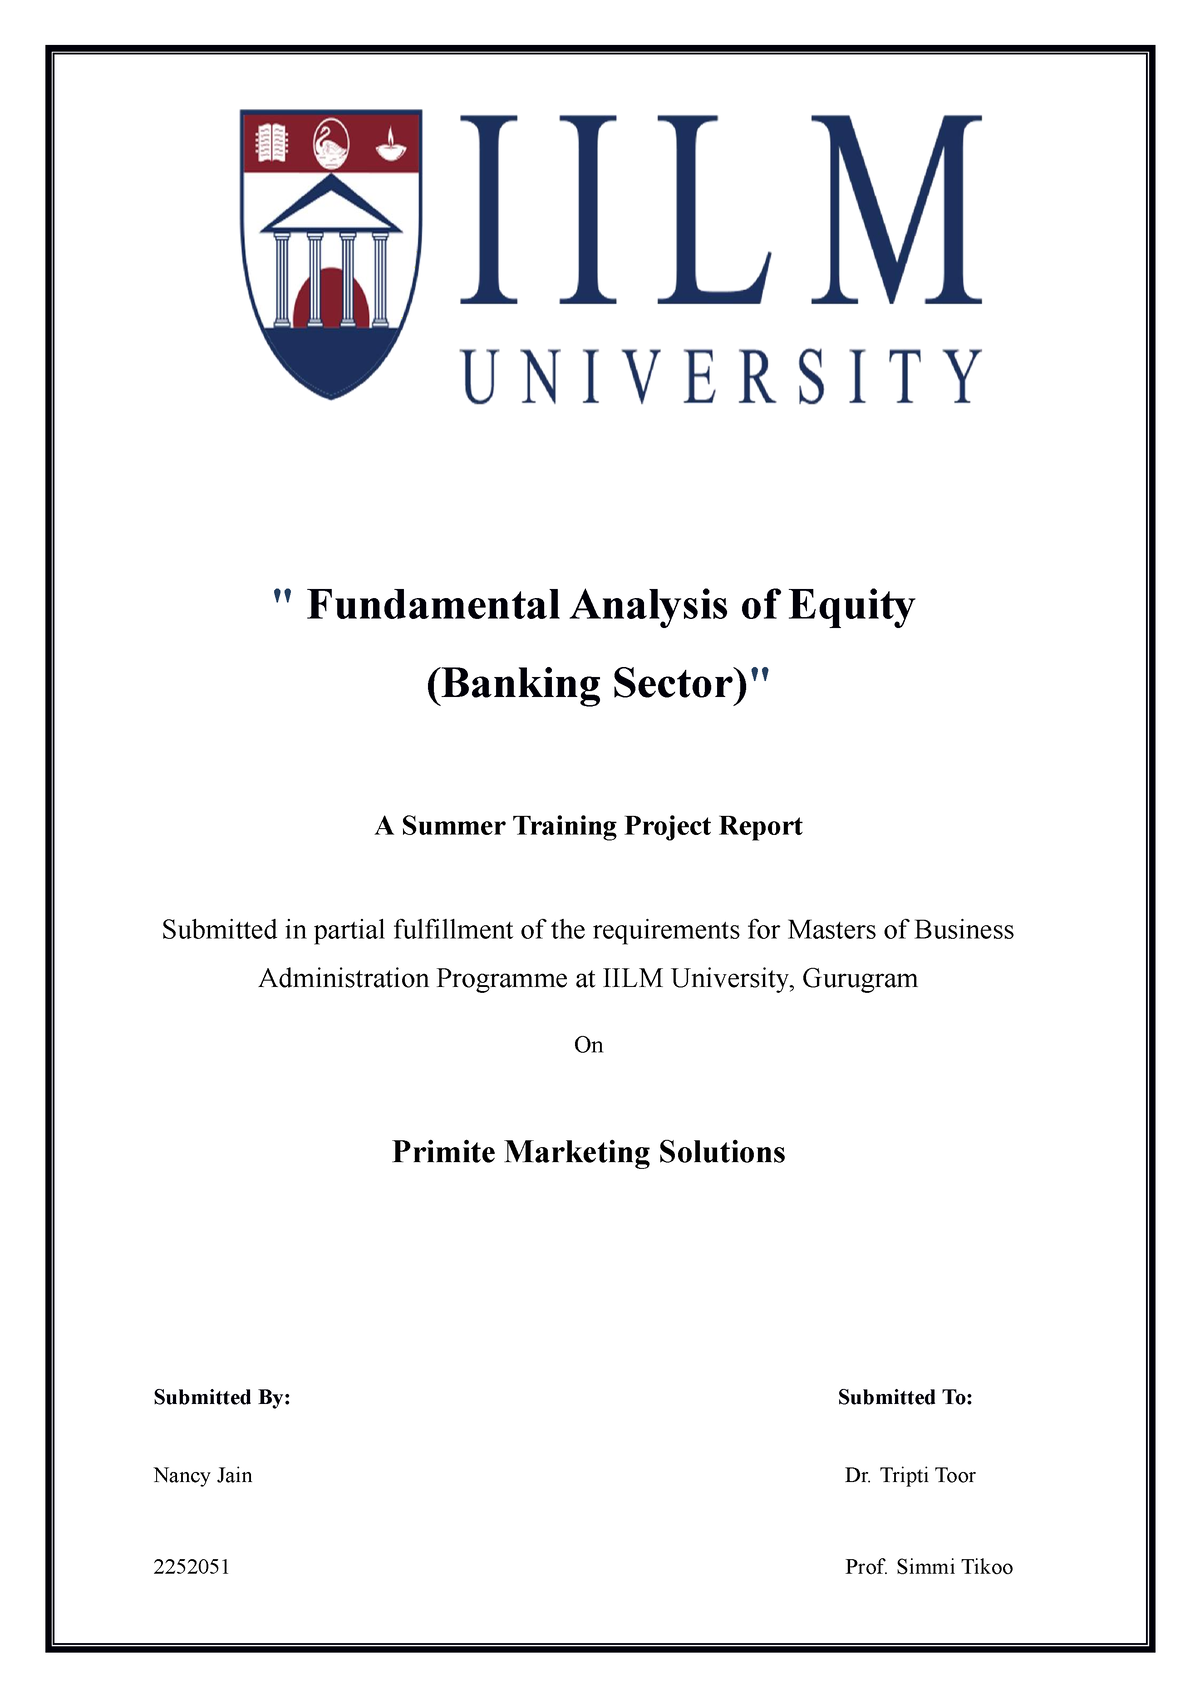 MBA SIP Report on fundamental analysis - 